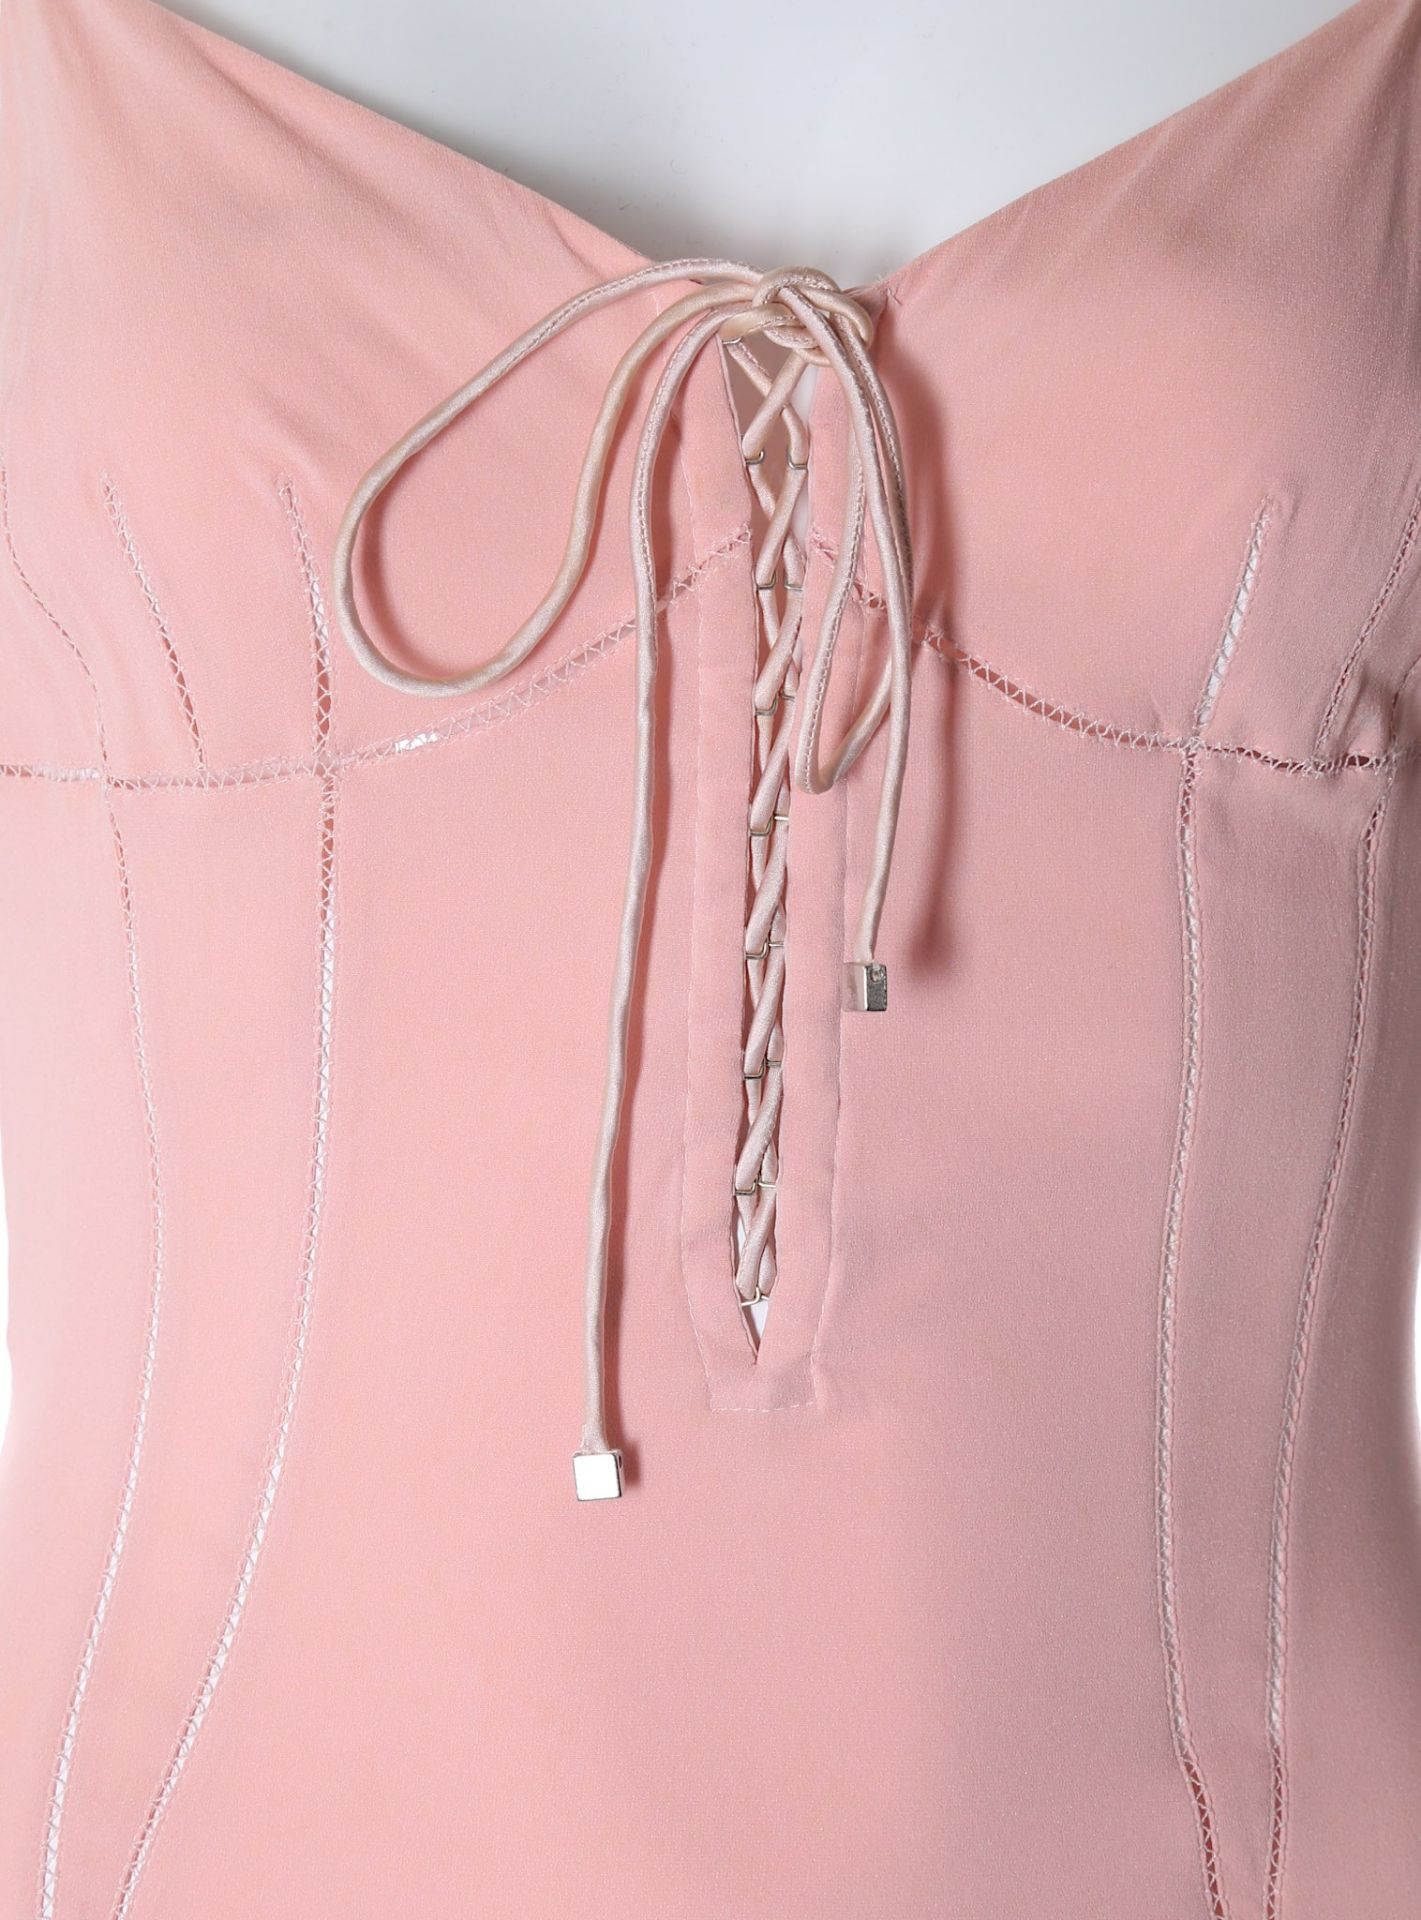 Dolce & Gabbana Pink Dress, lace up front with spa - Bild 2 aus 4